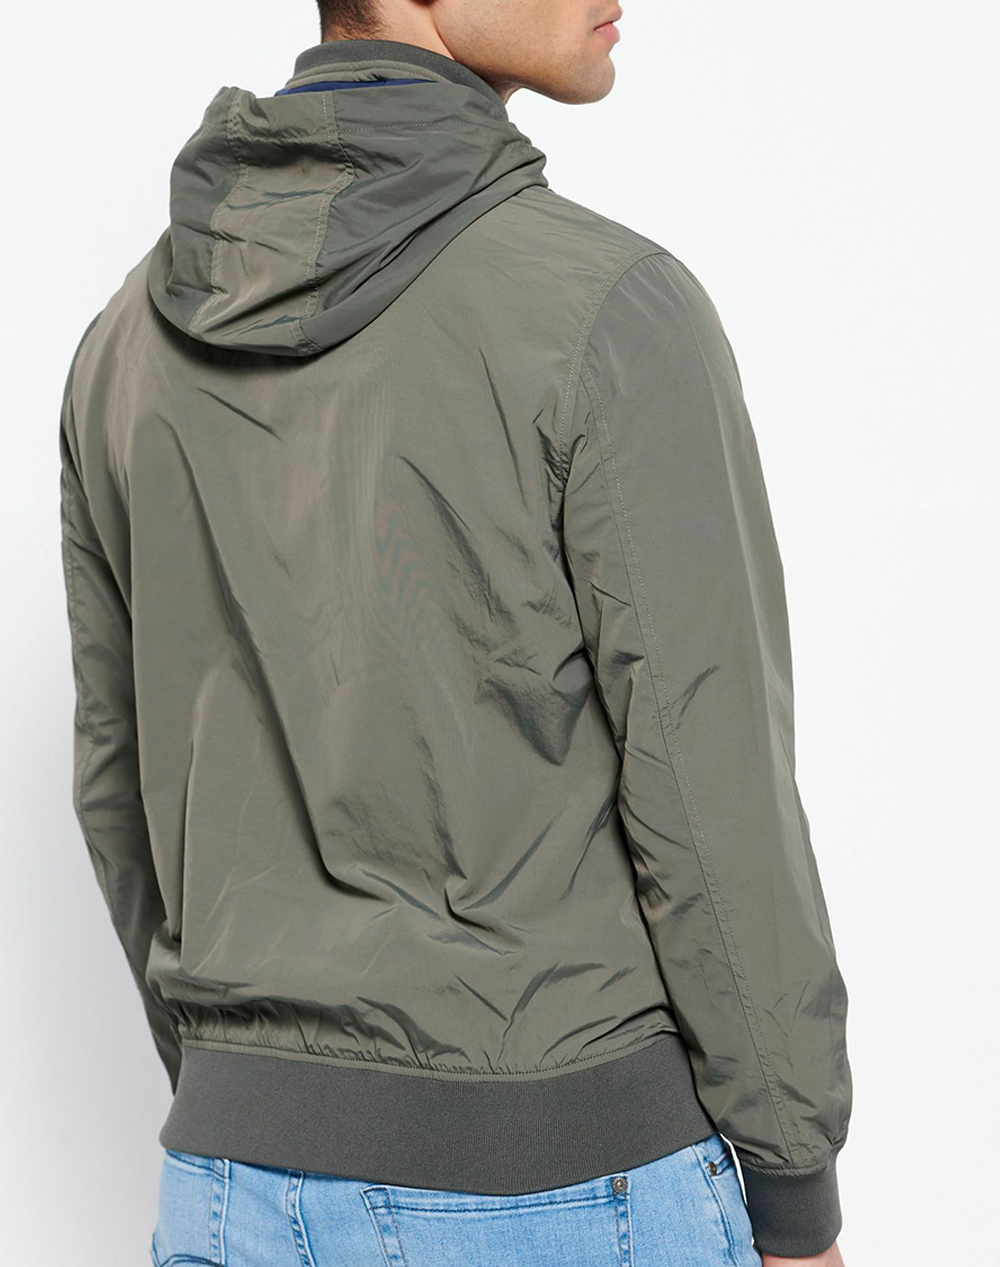 Lightweight jacket with detachable hood